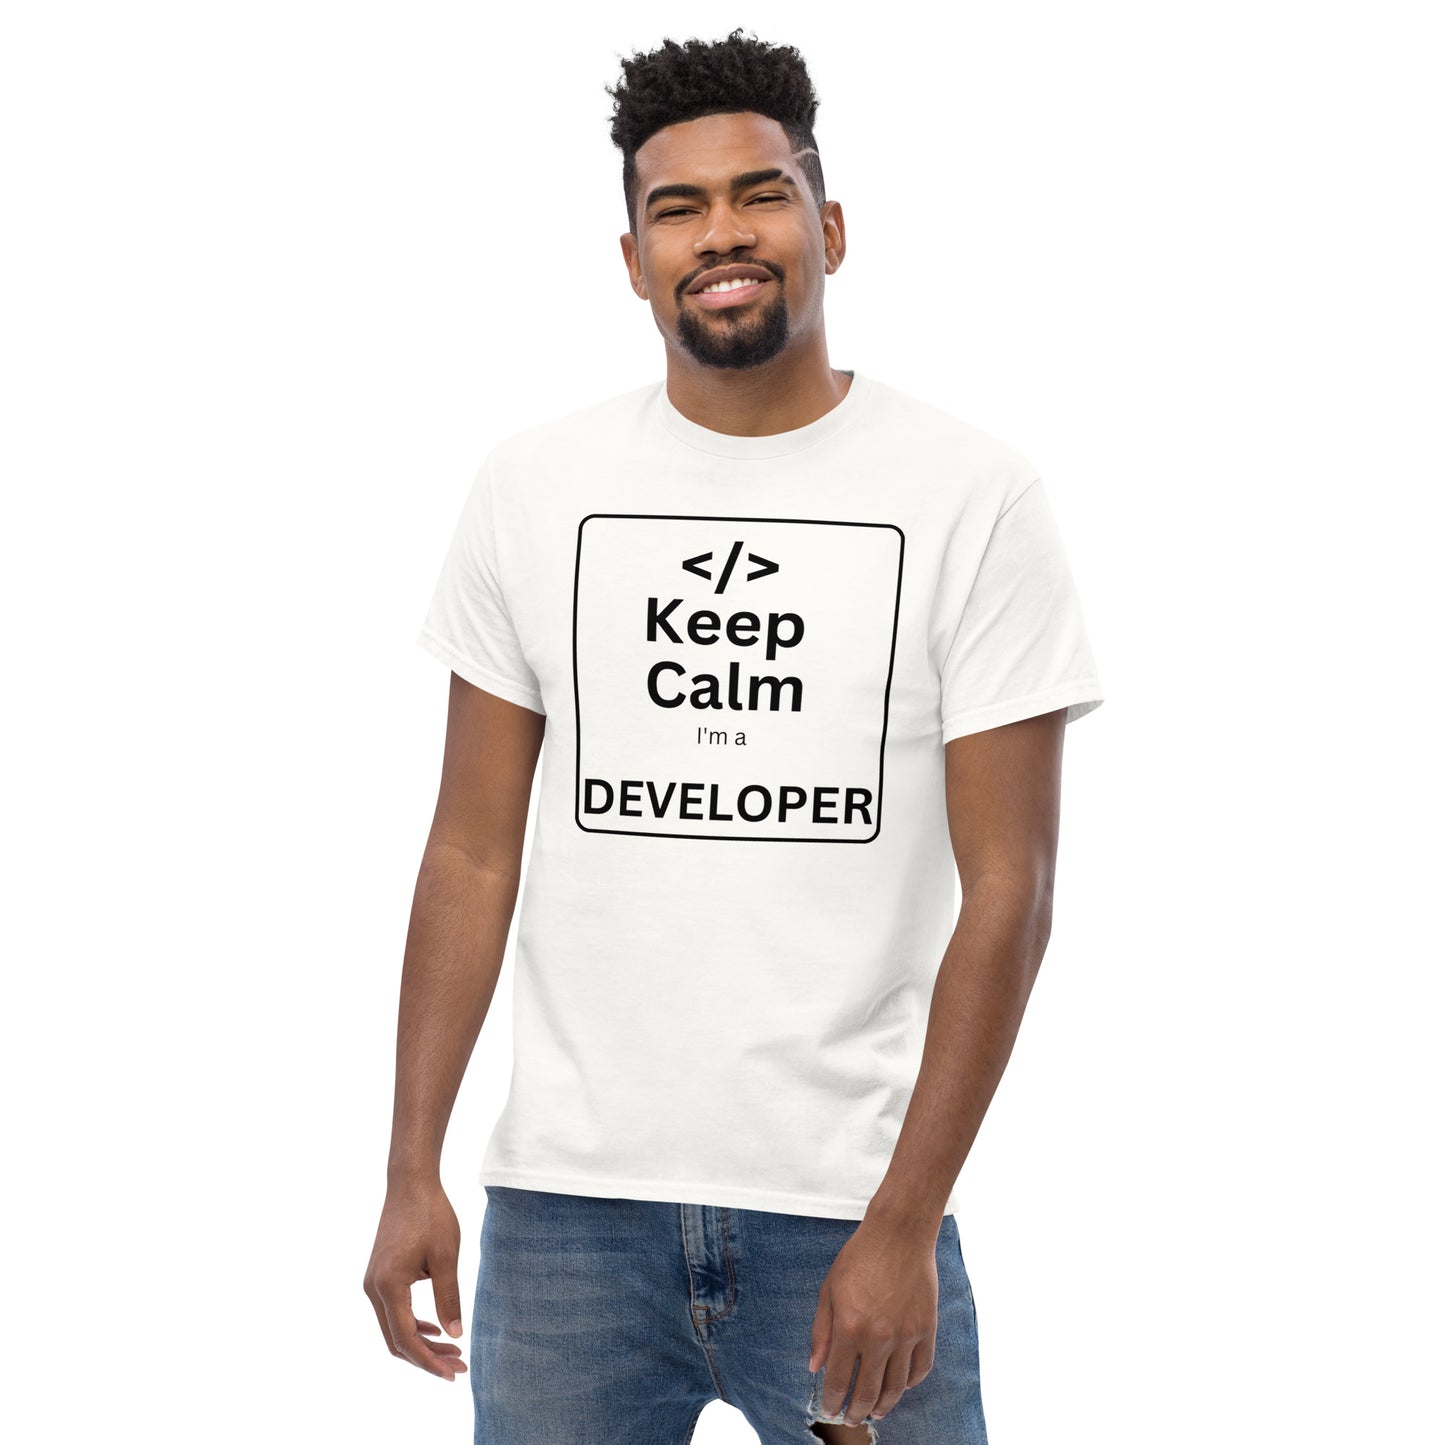 Developer - Keep Calm